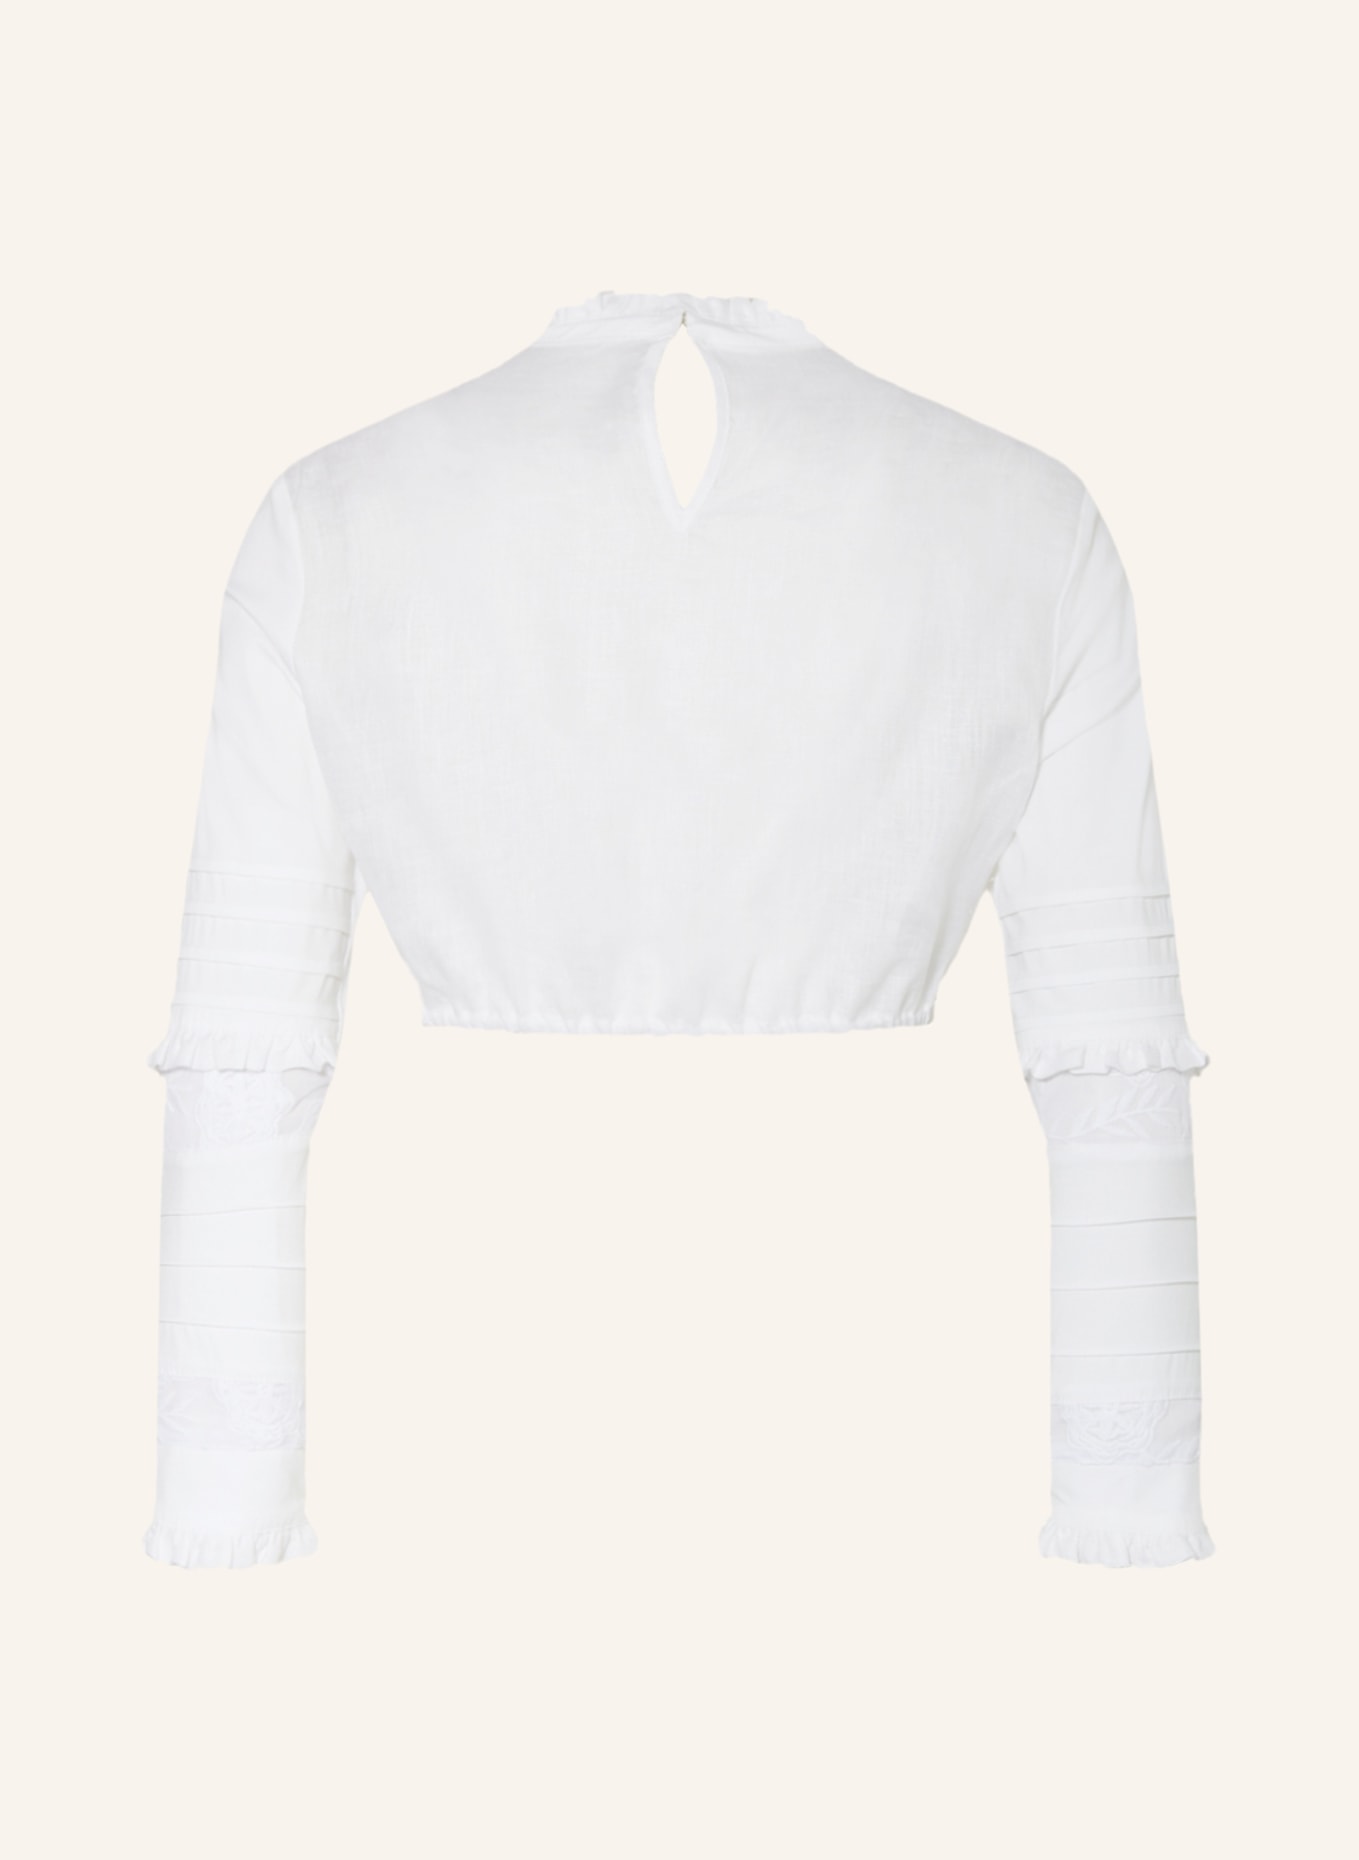 SPORTALM Dirndl blouse made of linen, Color: WHITE (Image 2)